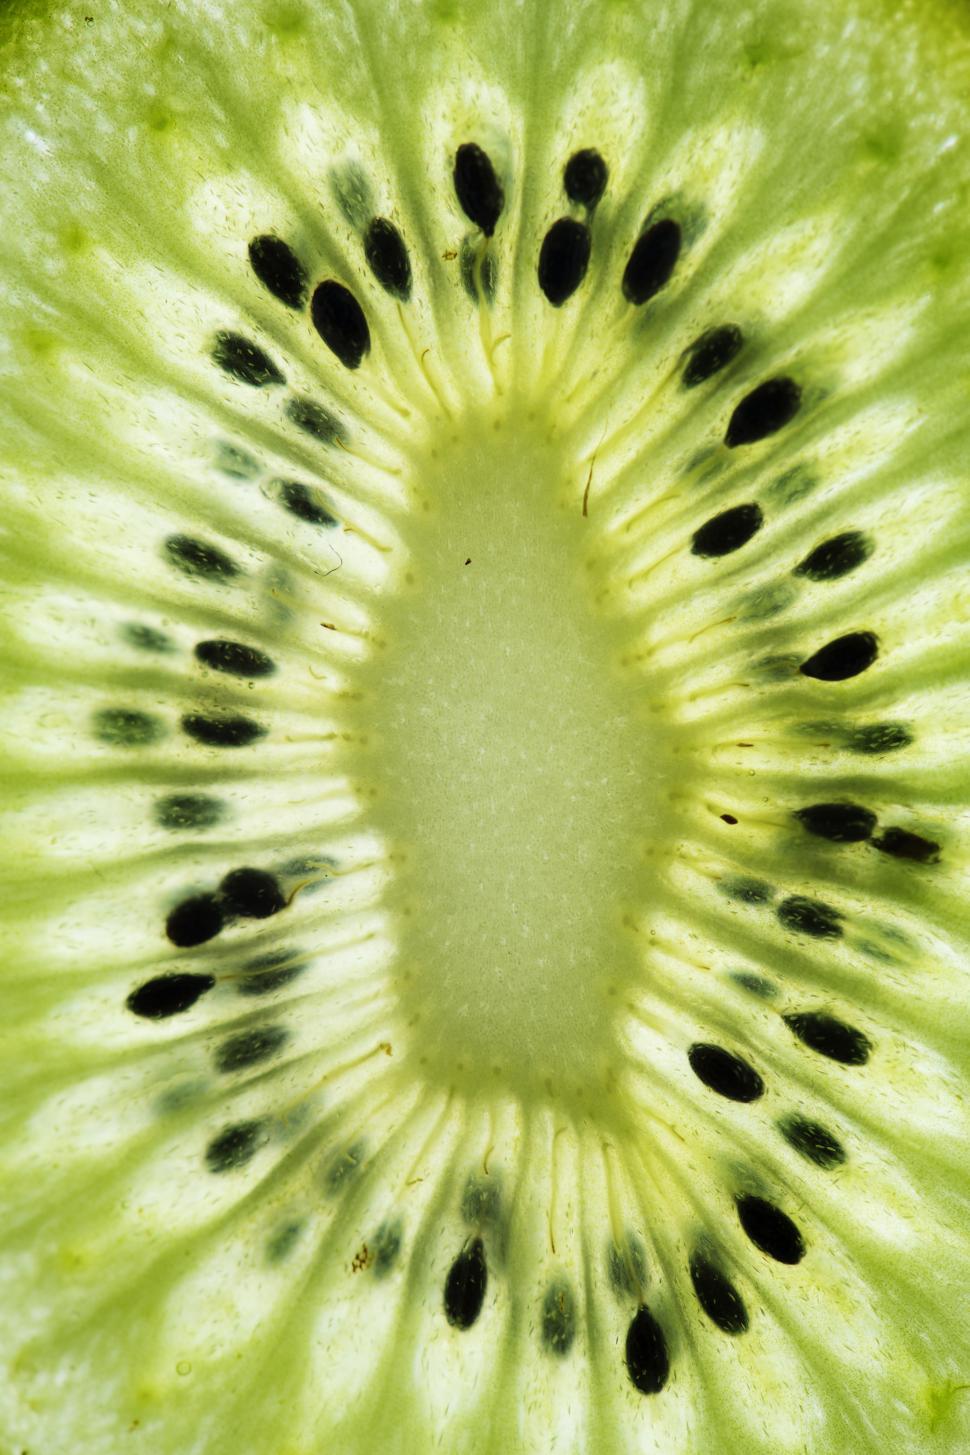 Free Image of Close up of a kiwi slice 